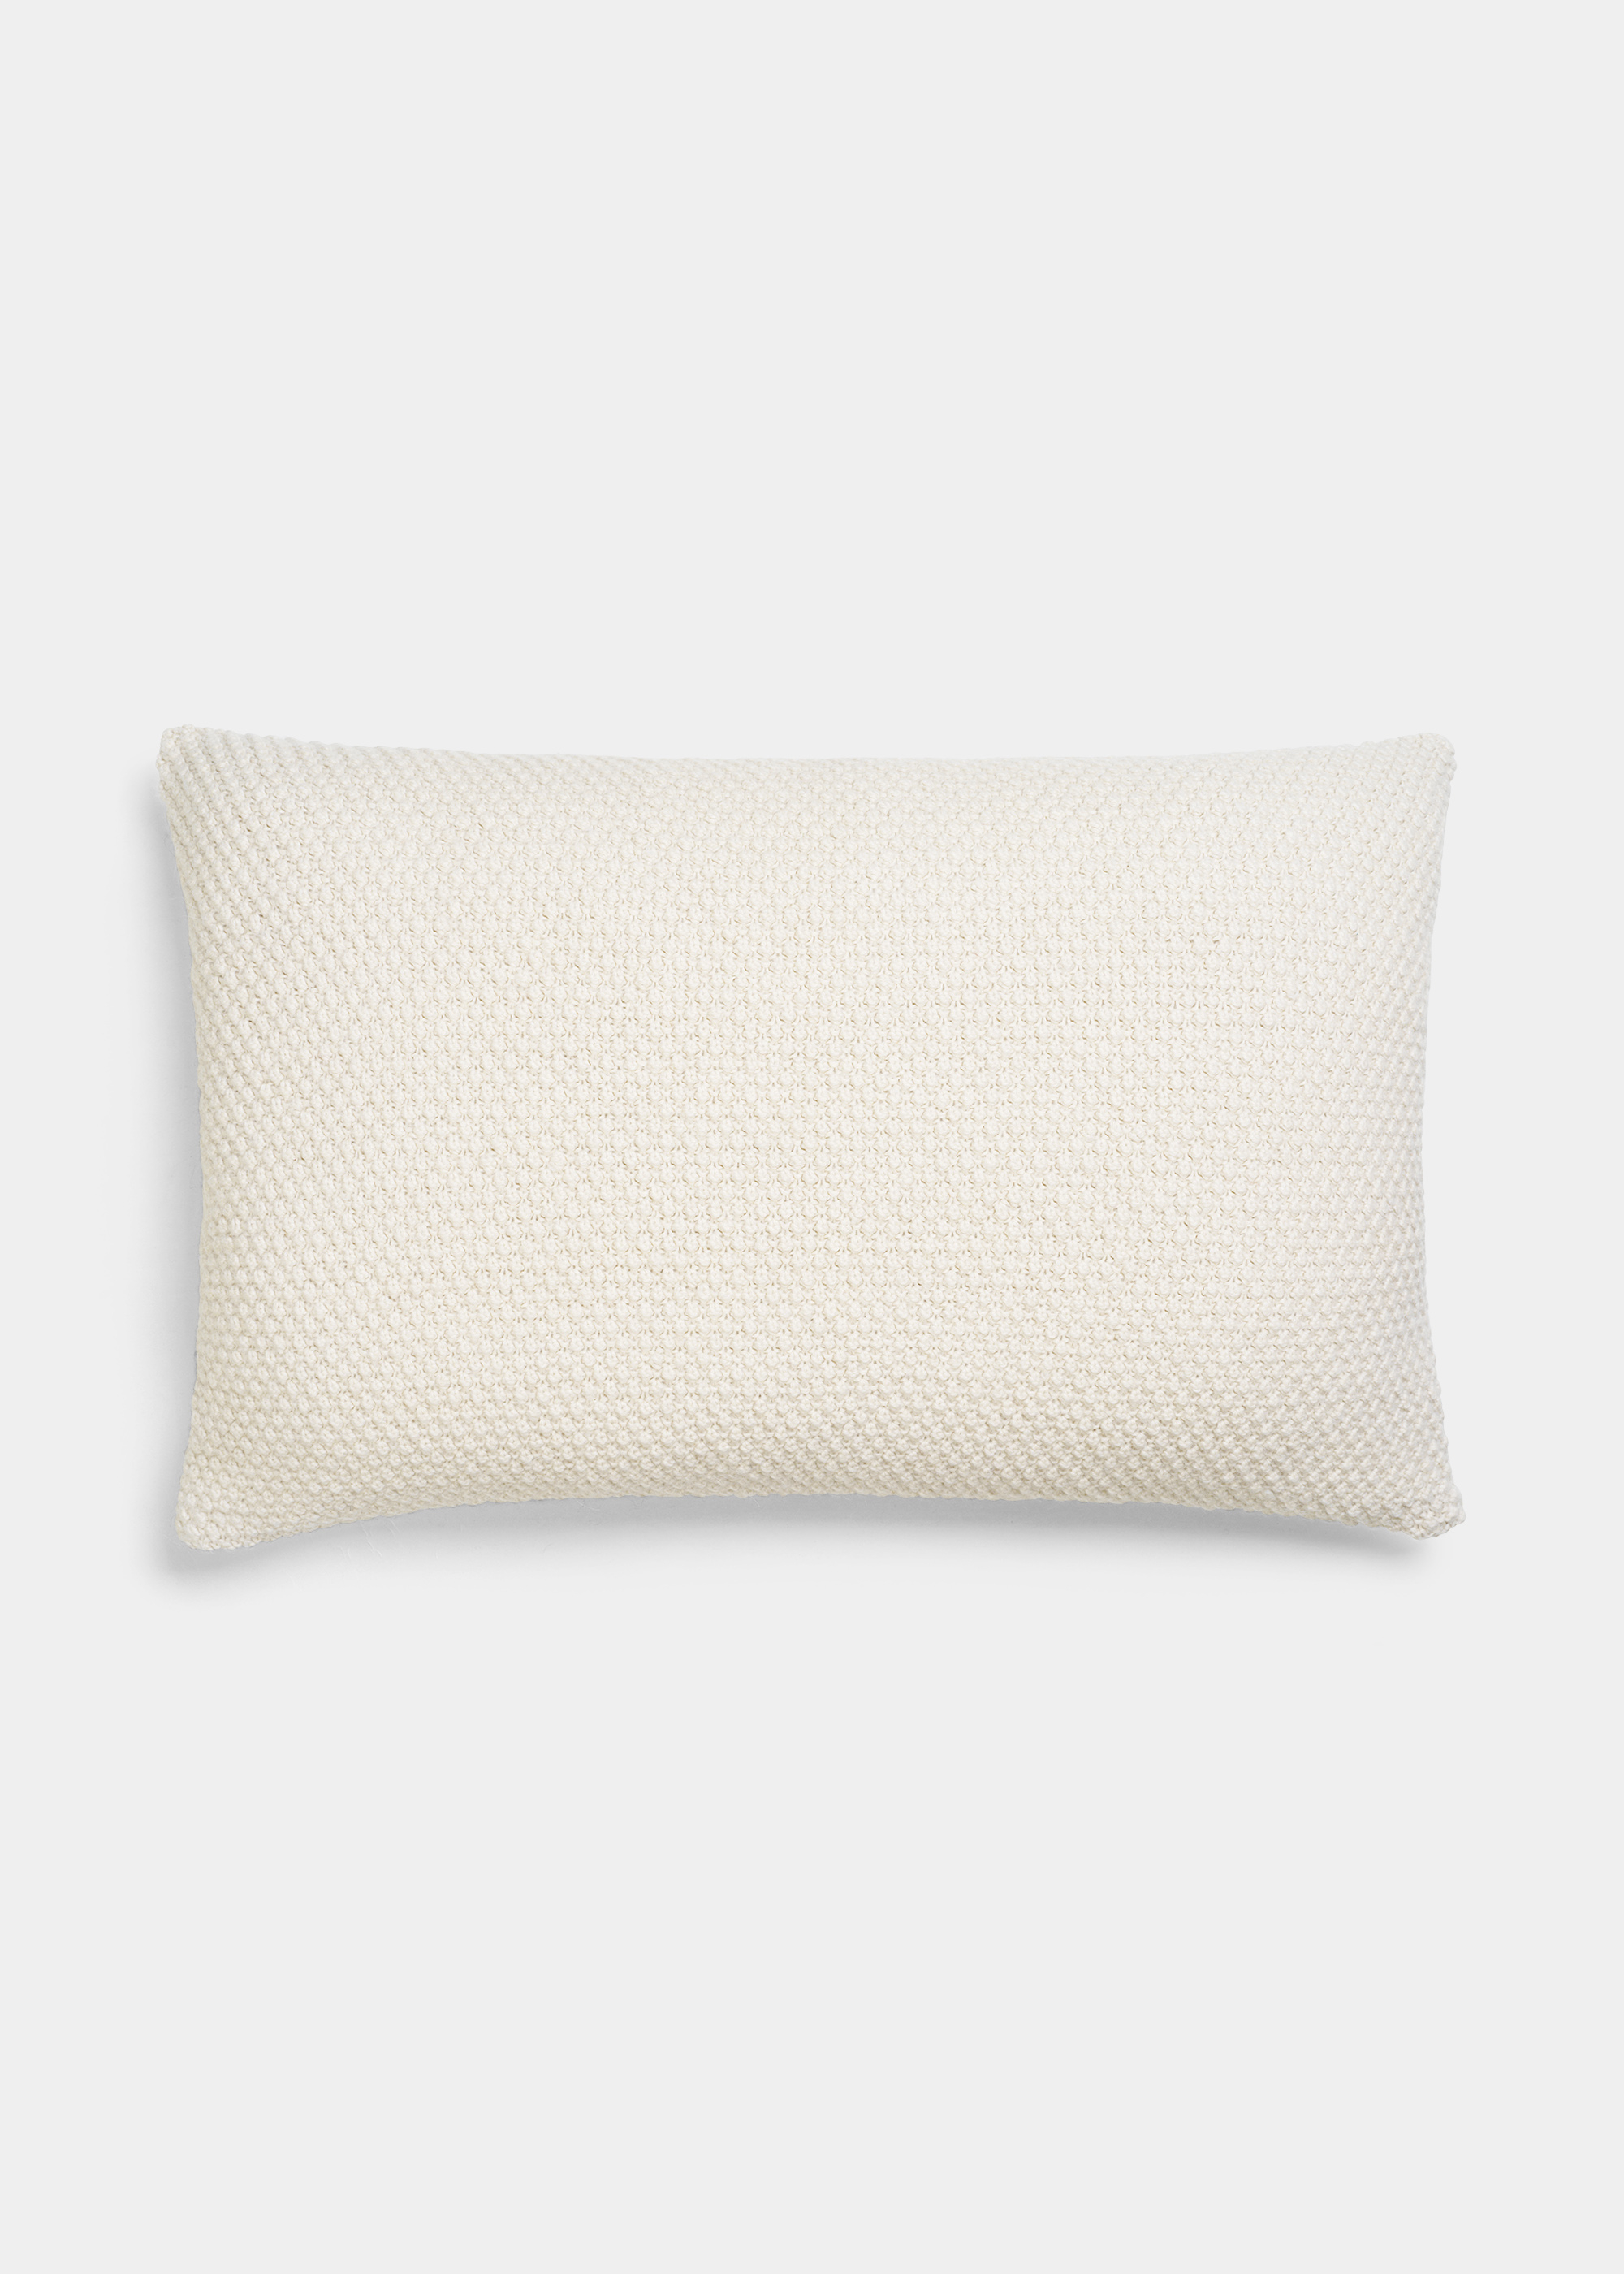 Cushions - Heather Classic pillow (50x80)